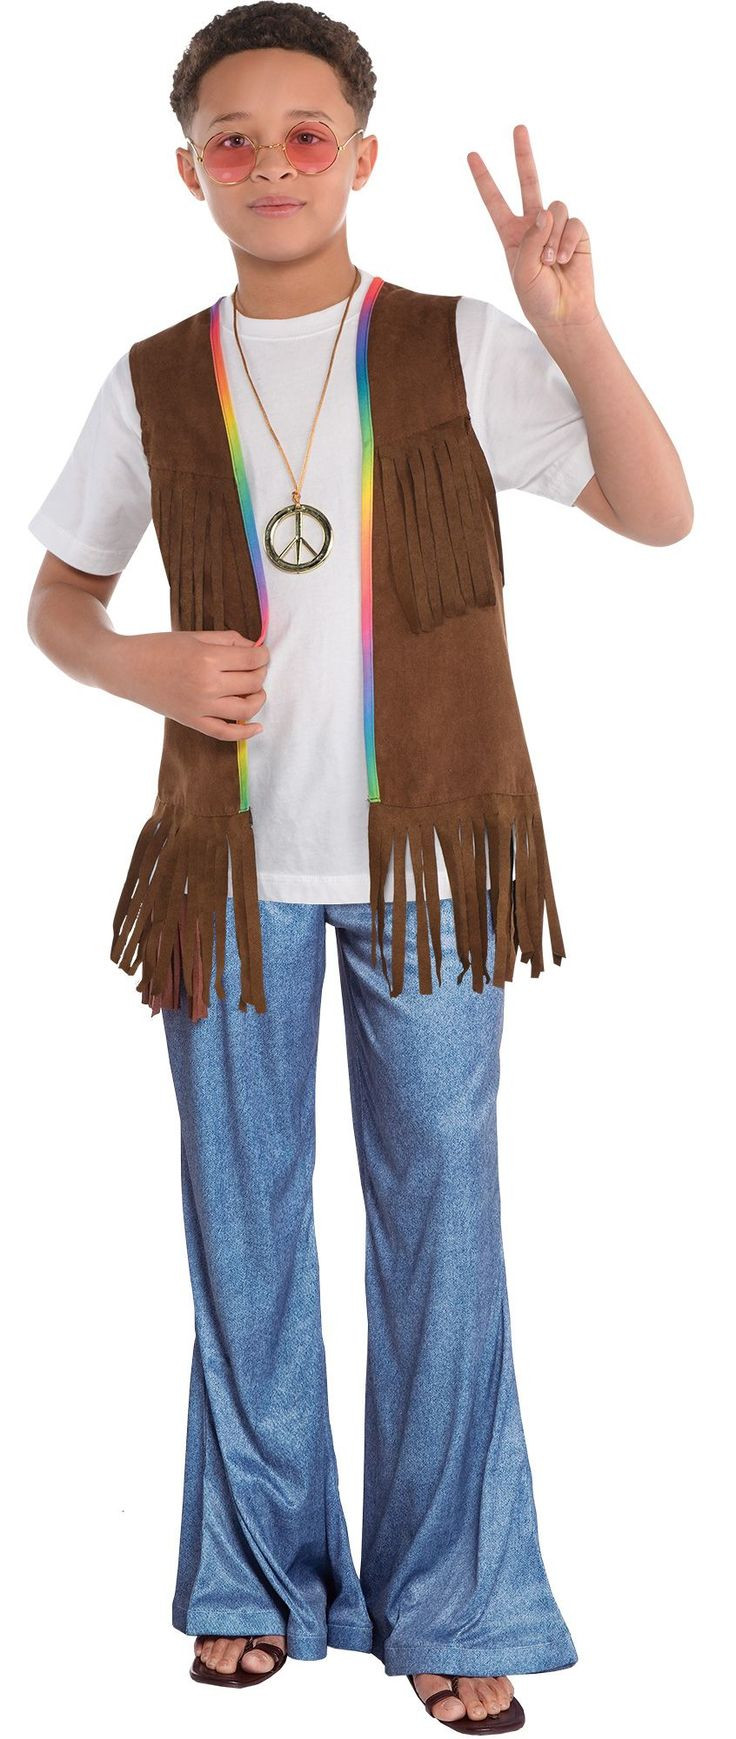 Disco Costume DIY
 DIY Hippie costume